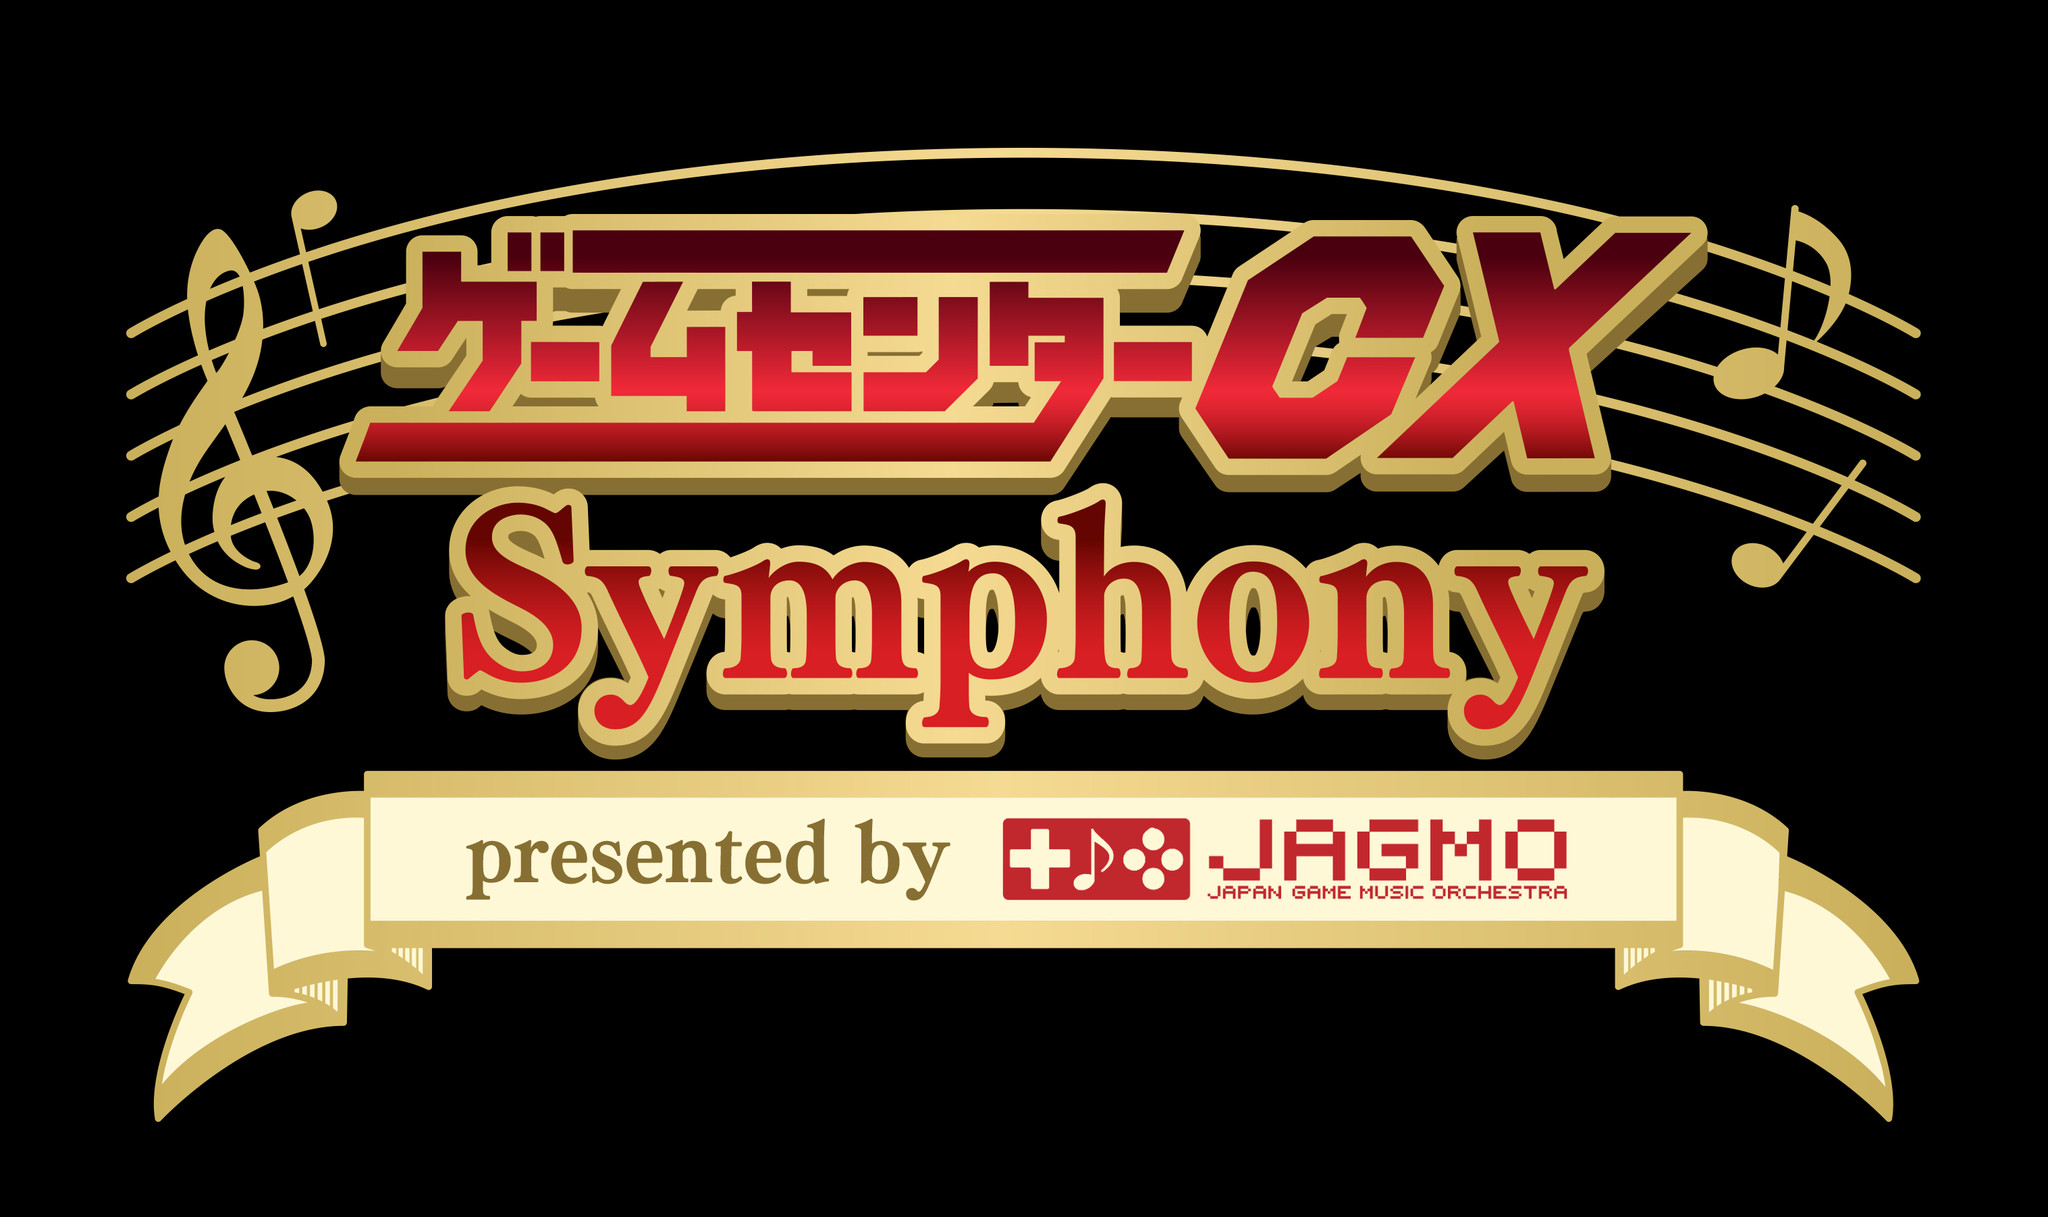 Jagmoフルオーケストラ公演 ゲームセンターcx Symphony Presented By Jagmo を19年4月29日 月 祝 に開催決定 株式会社レゾナージュのプレスリリース